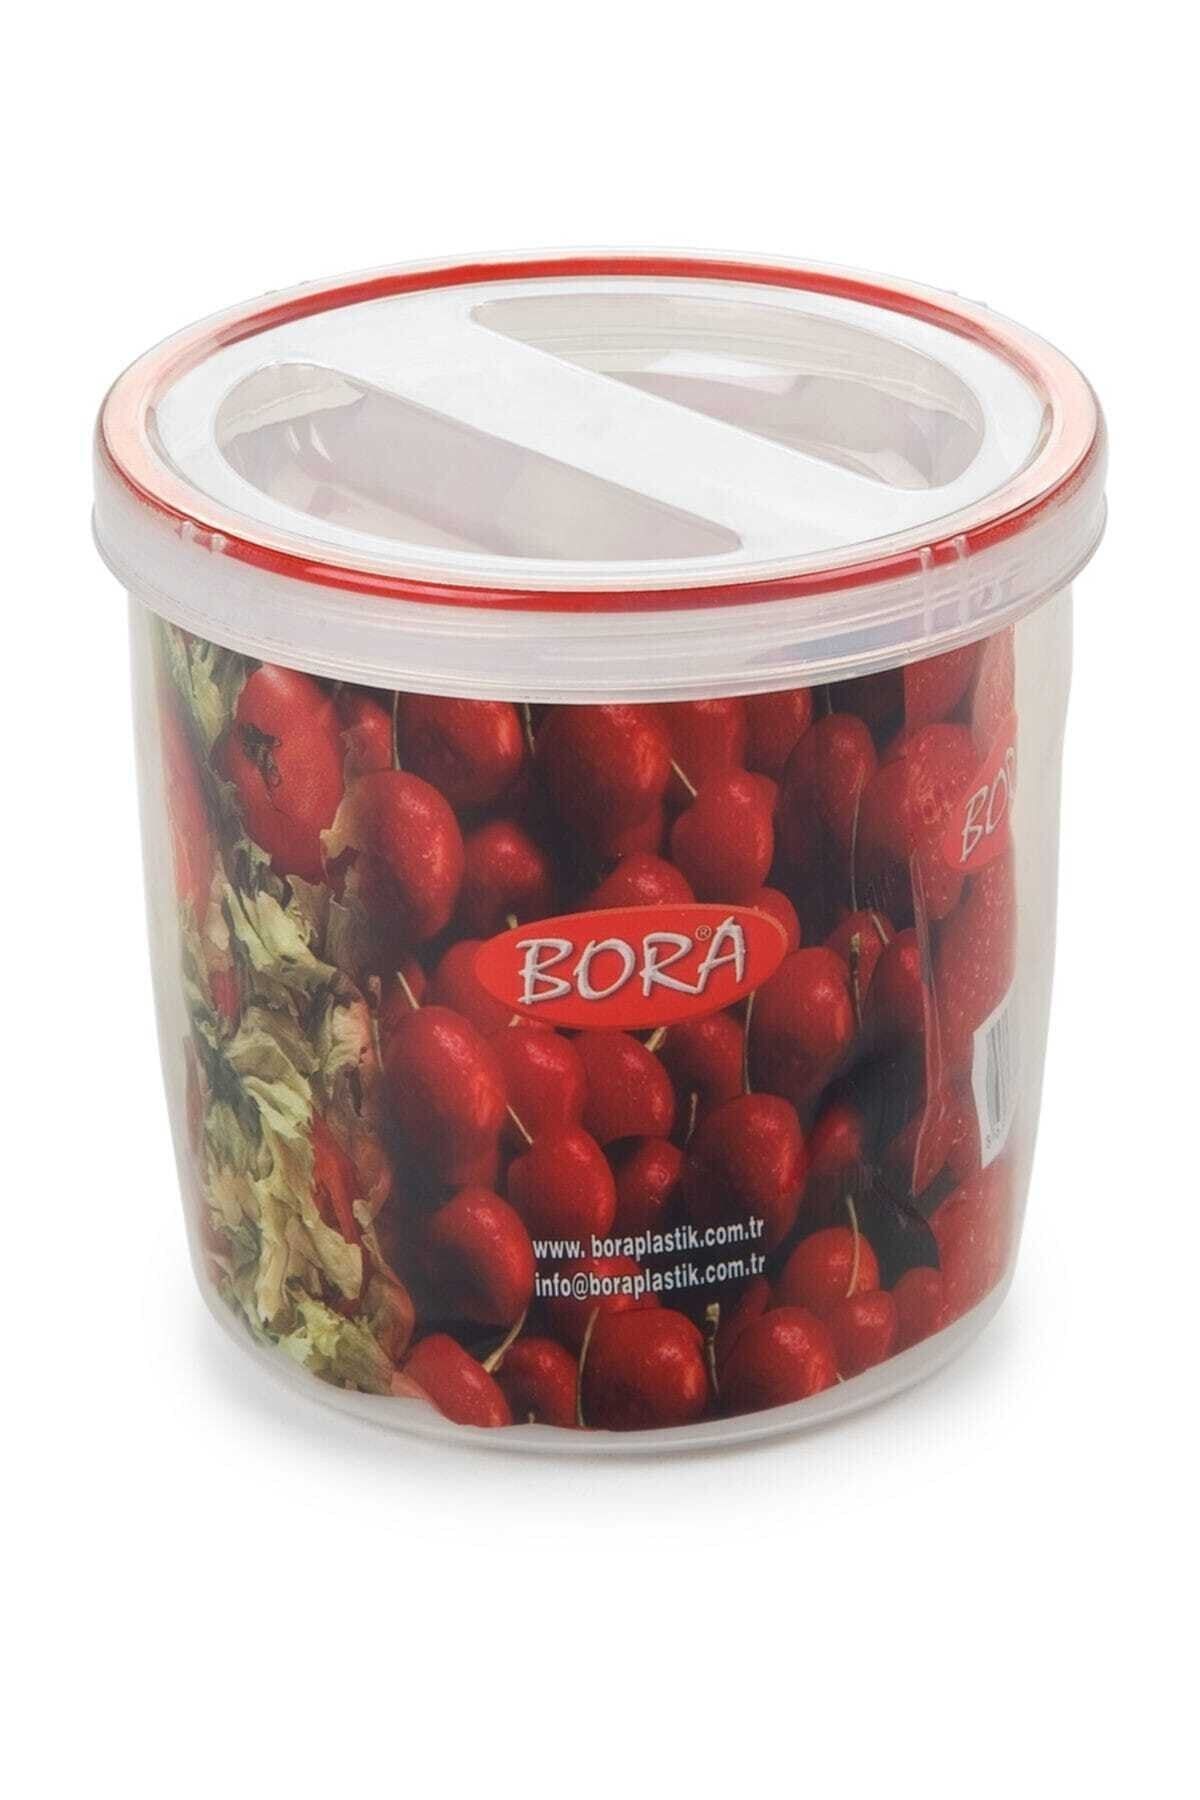 Bora Plastik Contalı Vidalı Saklama Kabı No 11  1,42 Lt Bo06